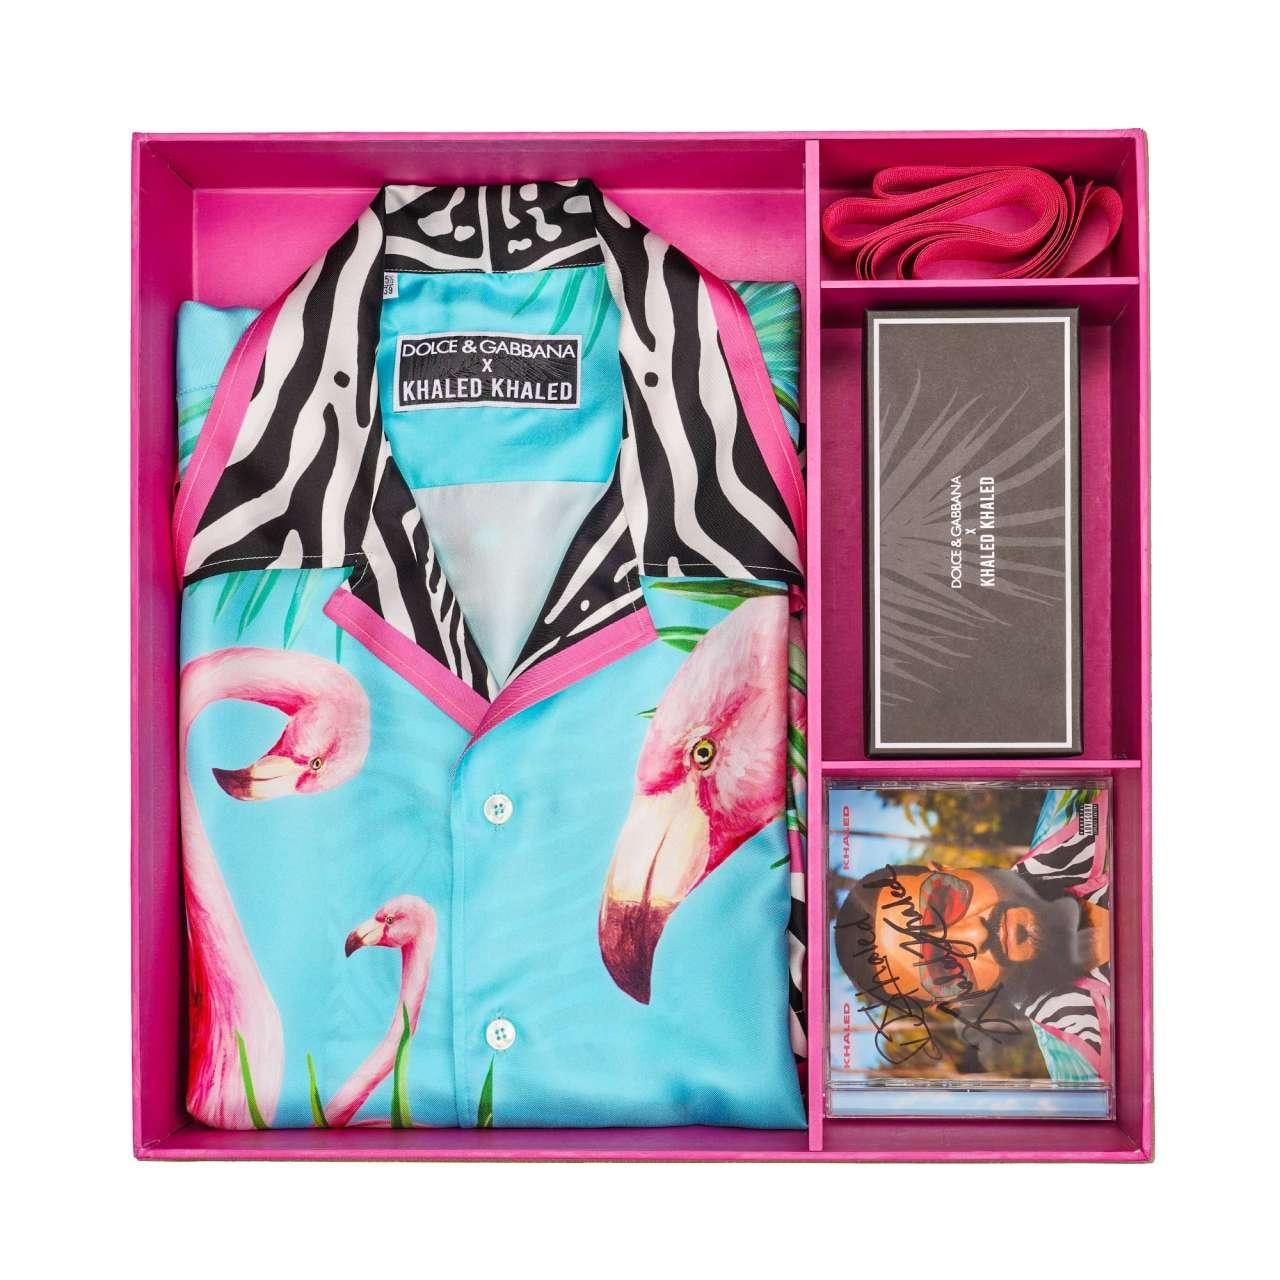 Dolce & Gabbana - DJ Khaled Silk Flamingo Zebra Shirt with Sunglasses and CD 38 For Sale 4